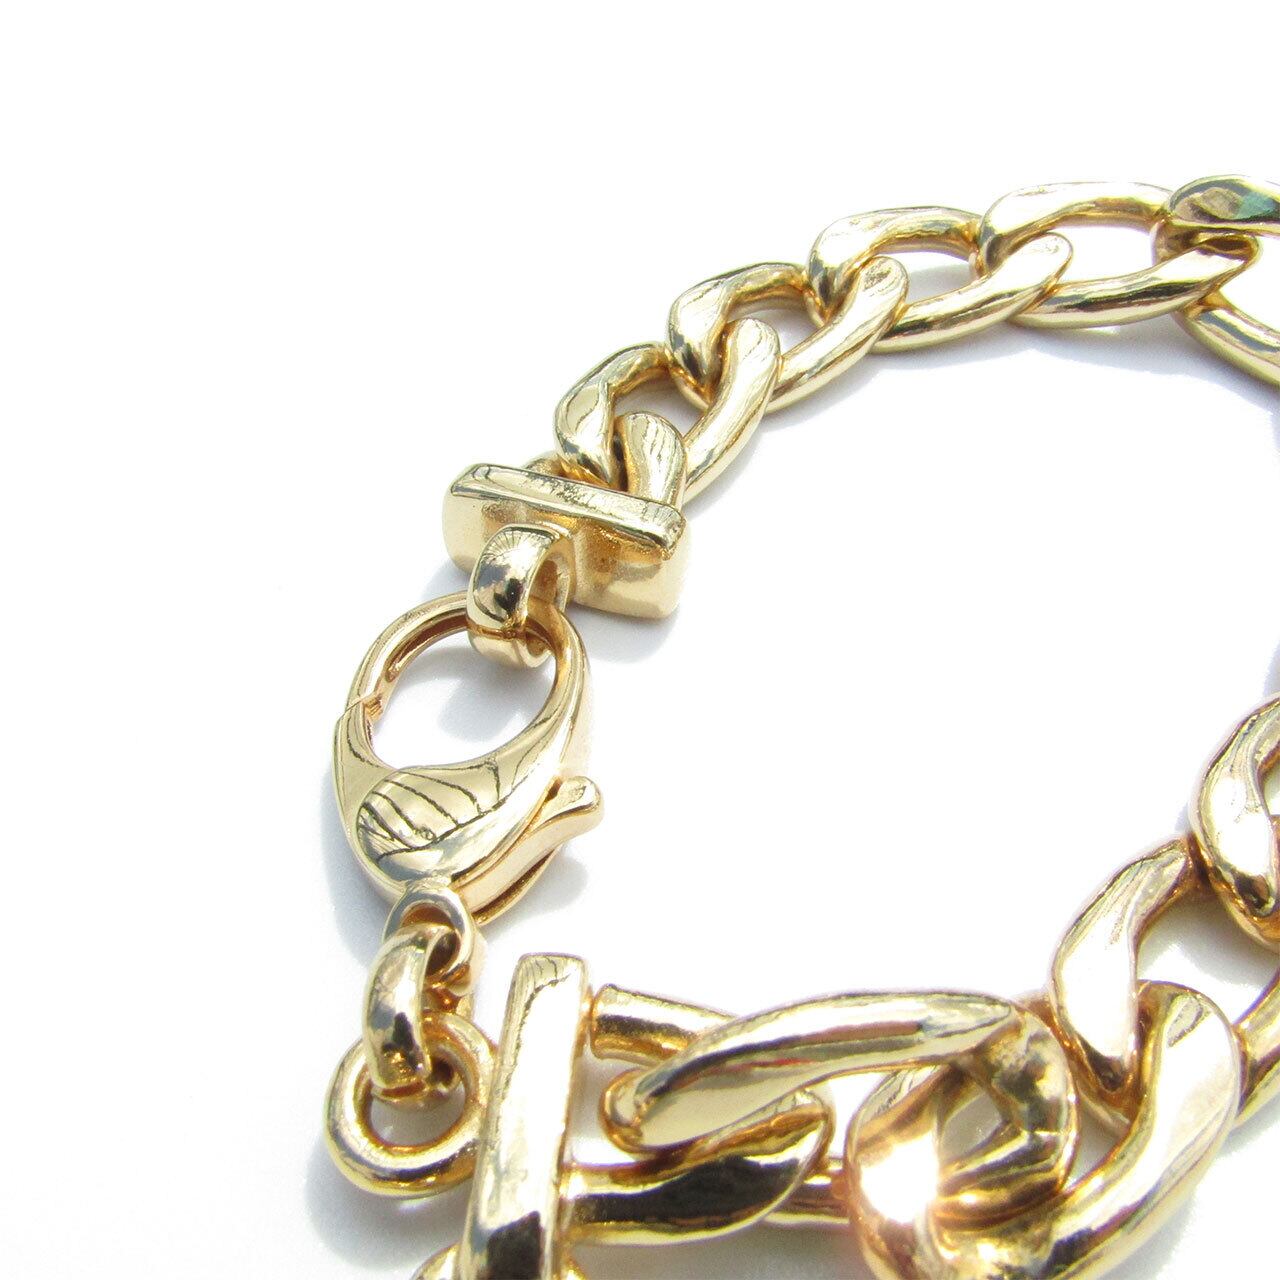 Burberry vintage chain design bracelet | PANIC ART MARKET powered by BASE